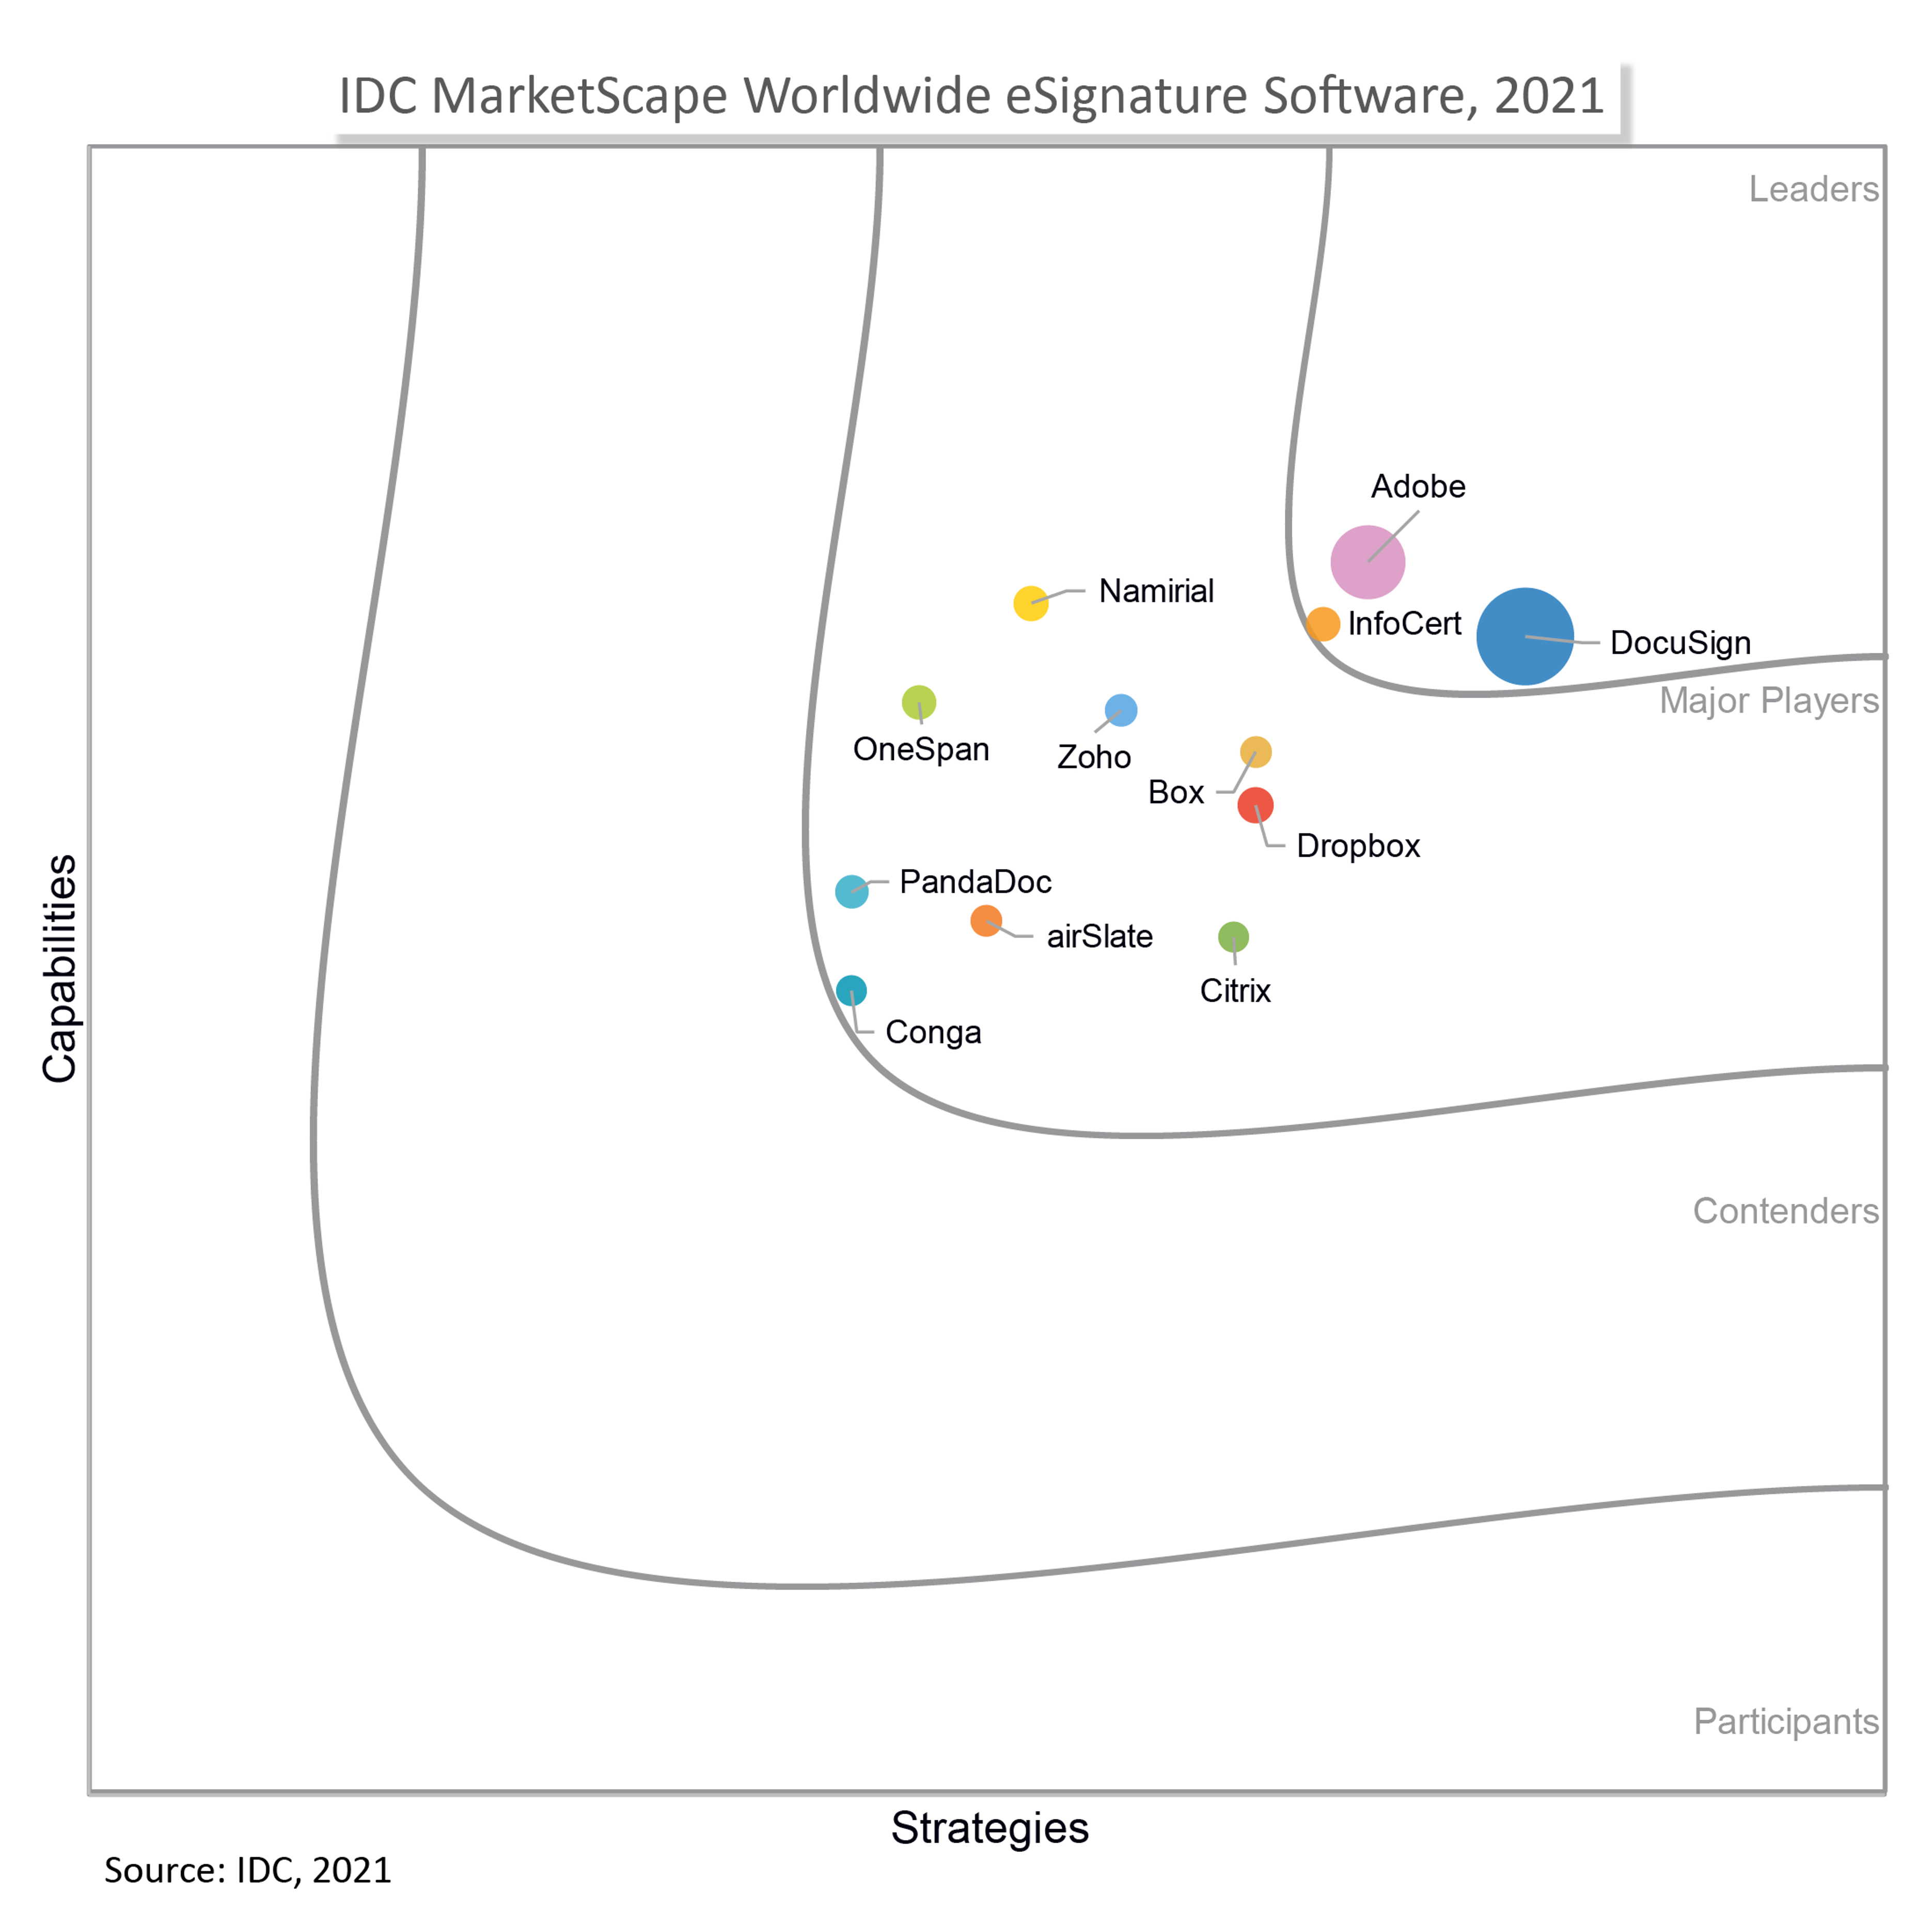 IDC MarketScape Worldwide eSignature Software 2021